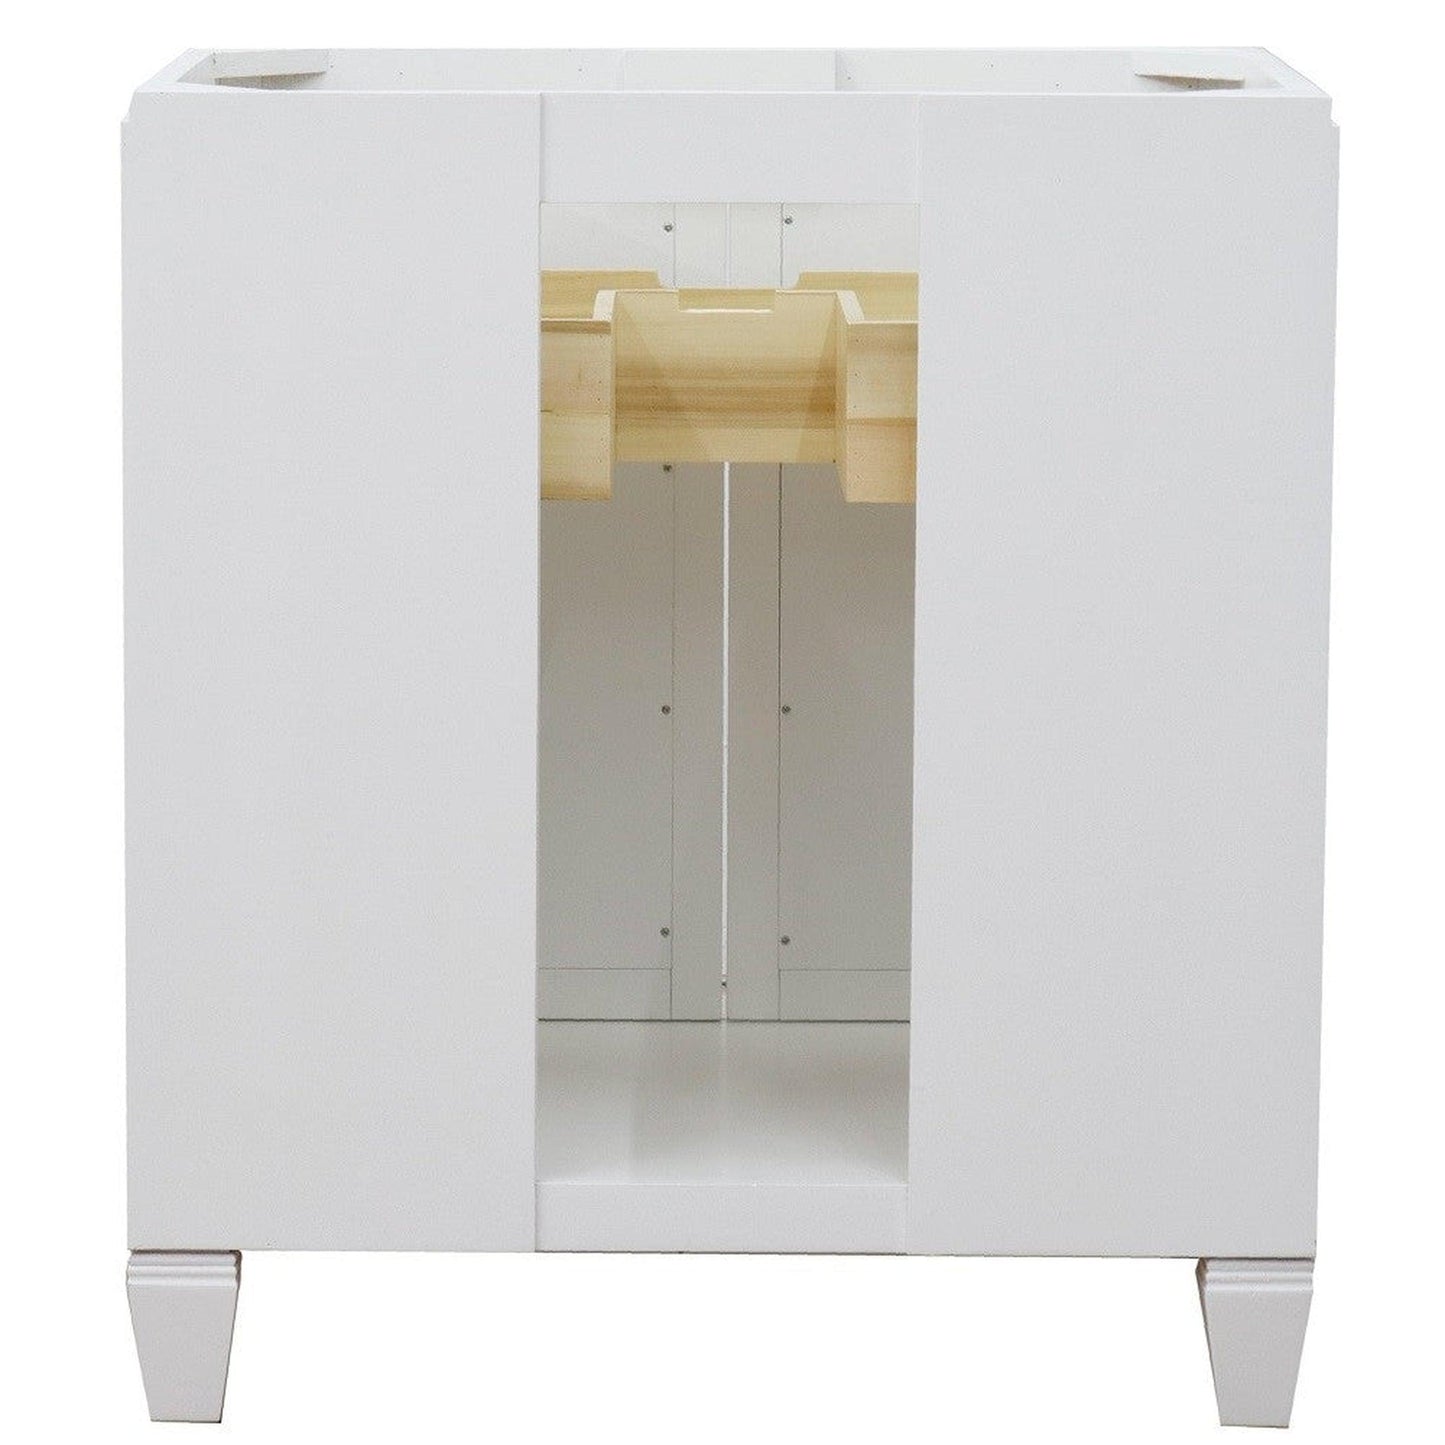 Bellaterra Home Trento 31" 2-Door 1-Drawer White Freestanding Vanity Set With Ceramic Undermount Oval Sink and Gray Granite Top